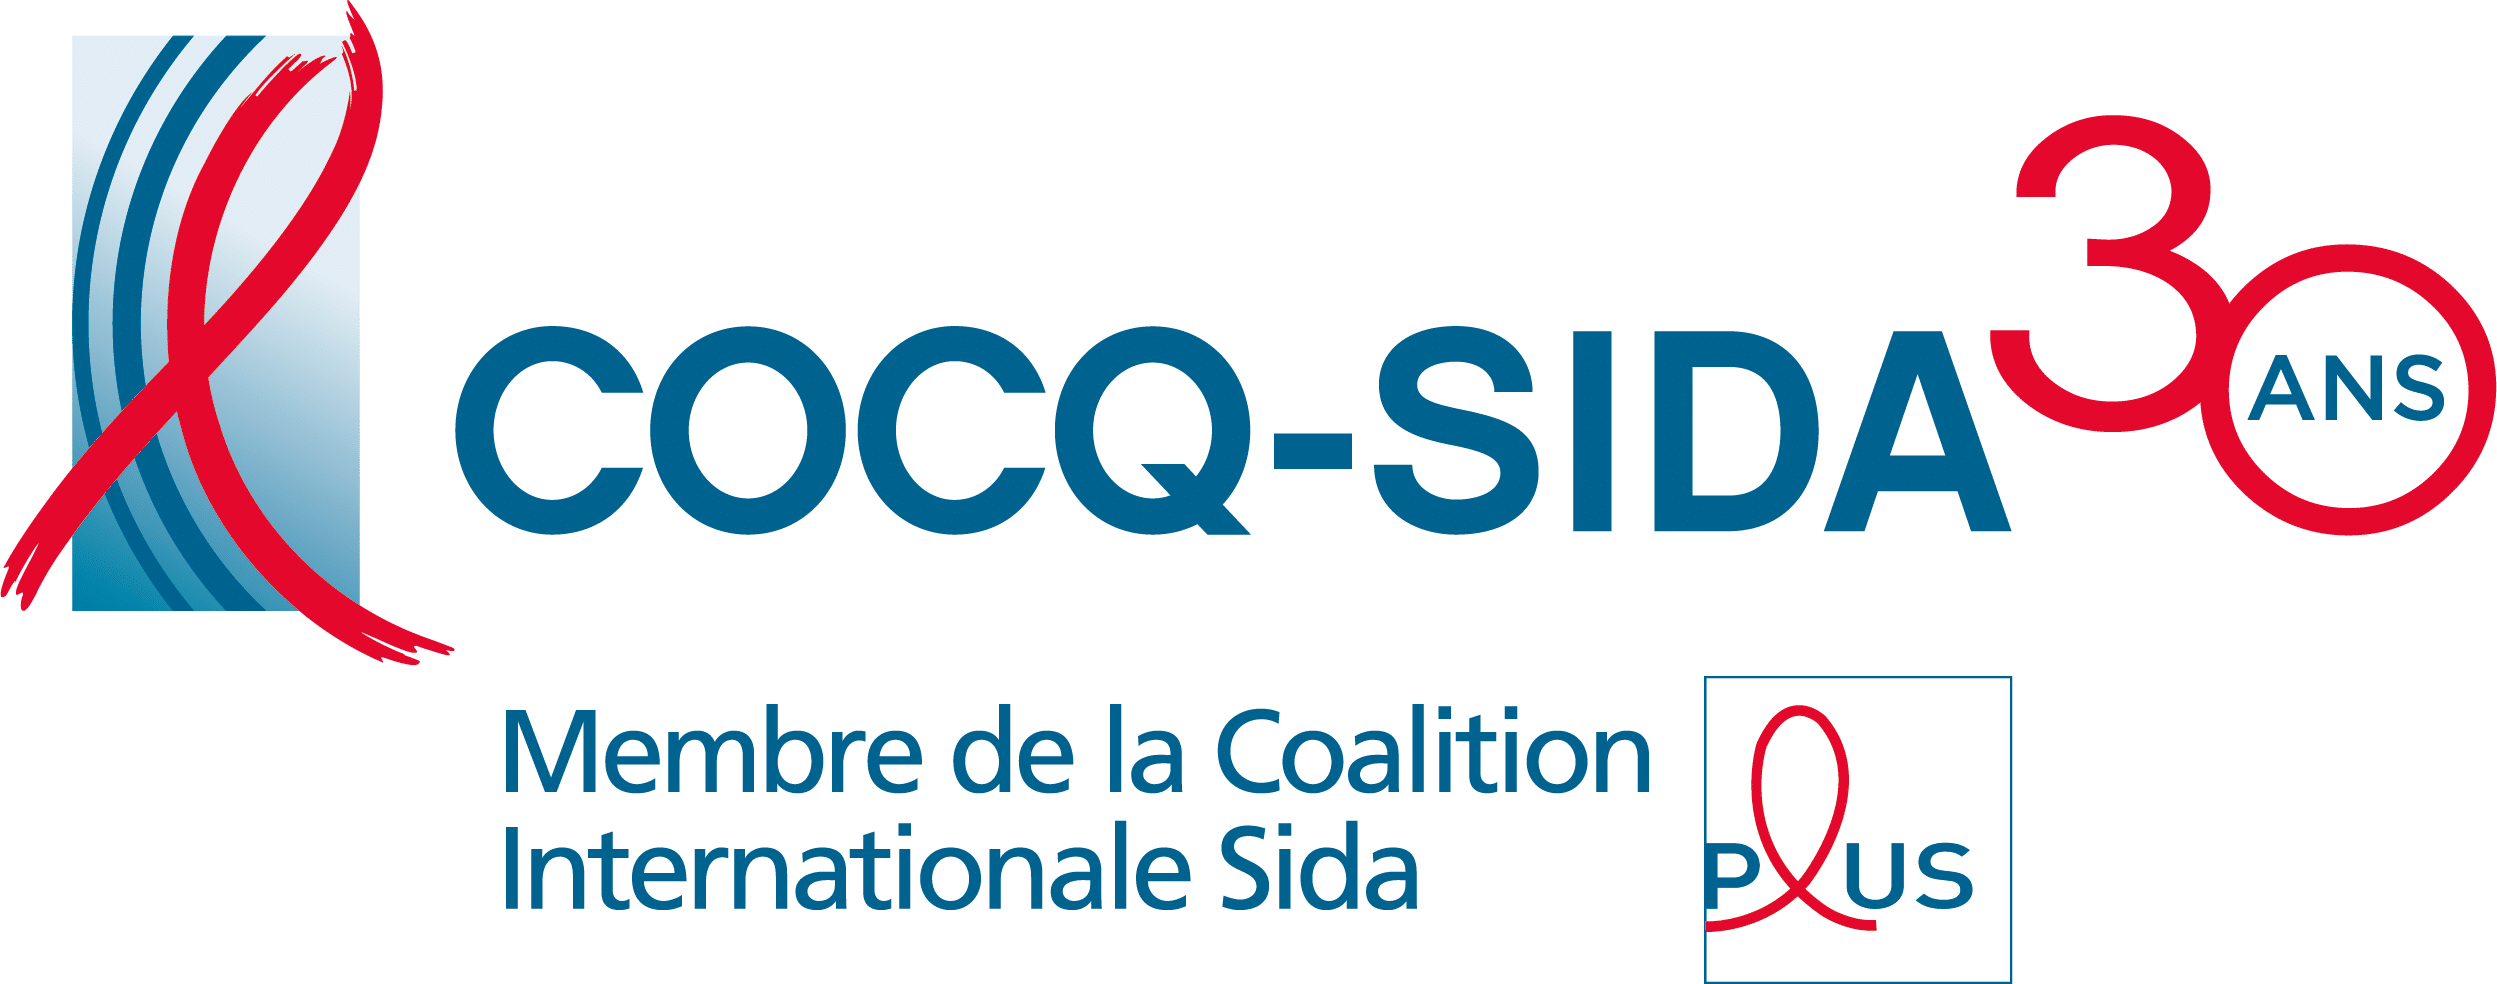 Logo COCQ-SIDA